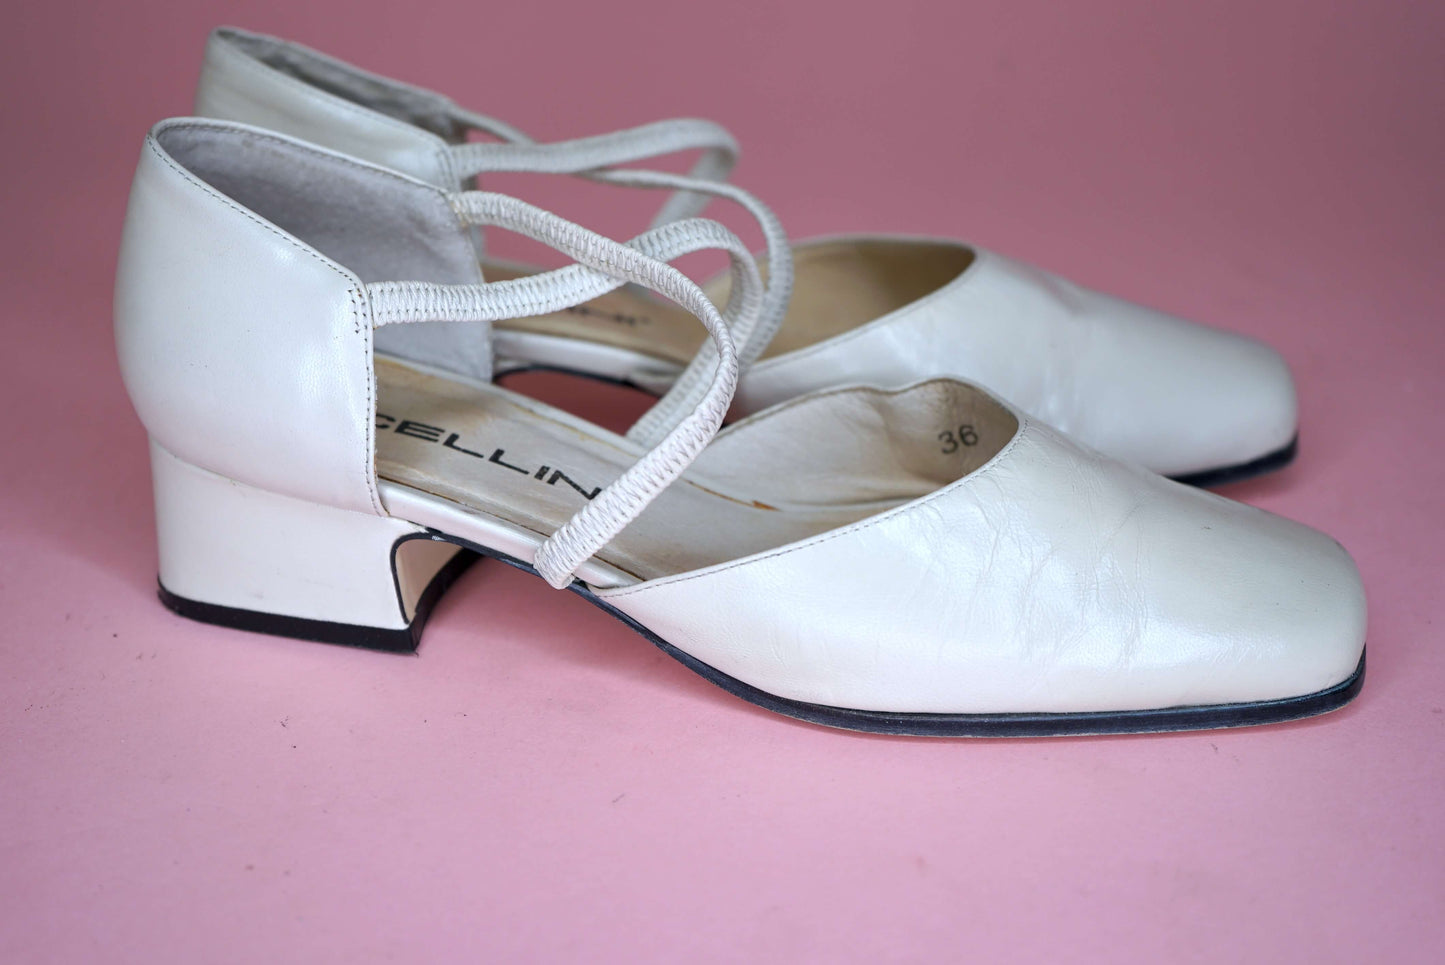 Cream Low Heel Vintage Shoes Beige Leather Cross Strap Pumps White Almond Toe Gabor Shoes UK Size 3-3.5/EU 36-36.5